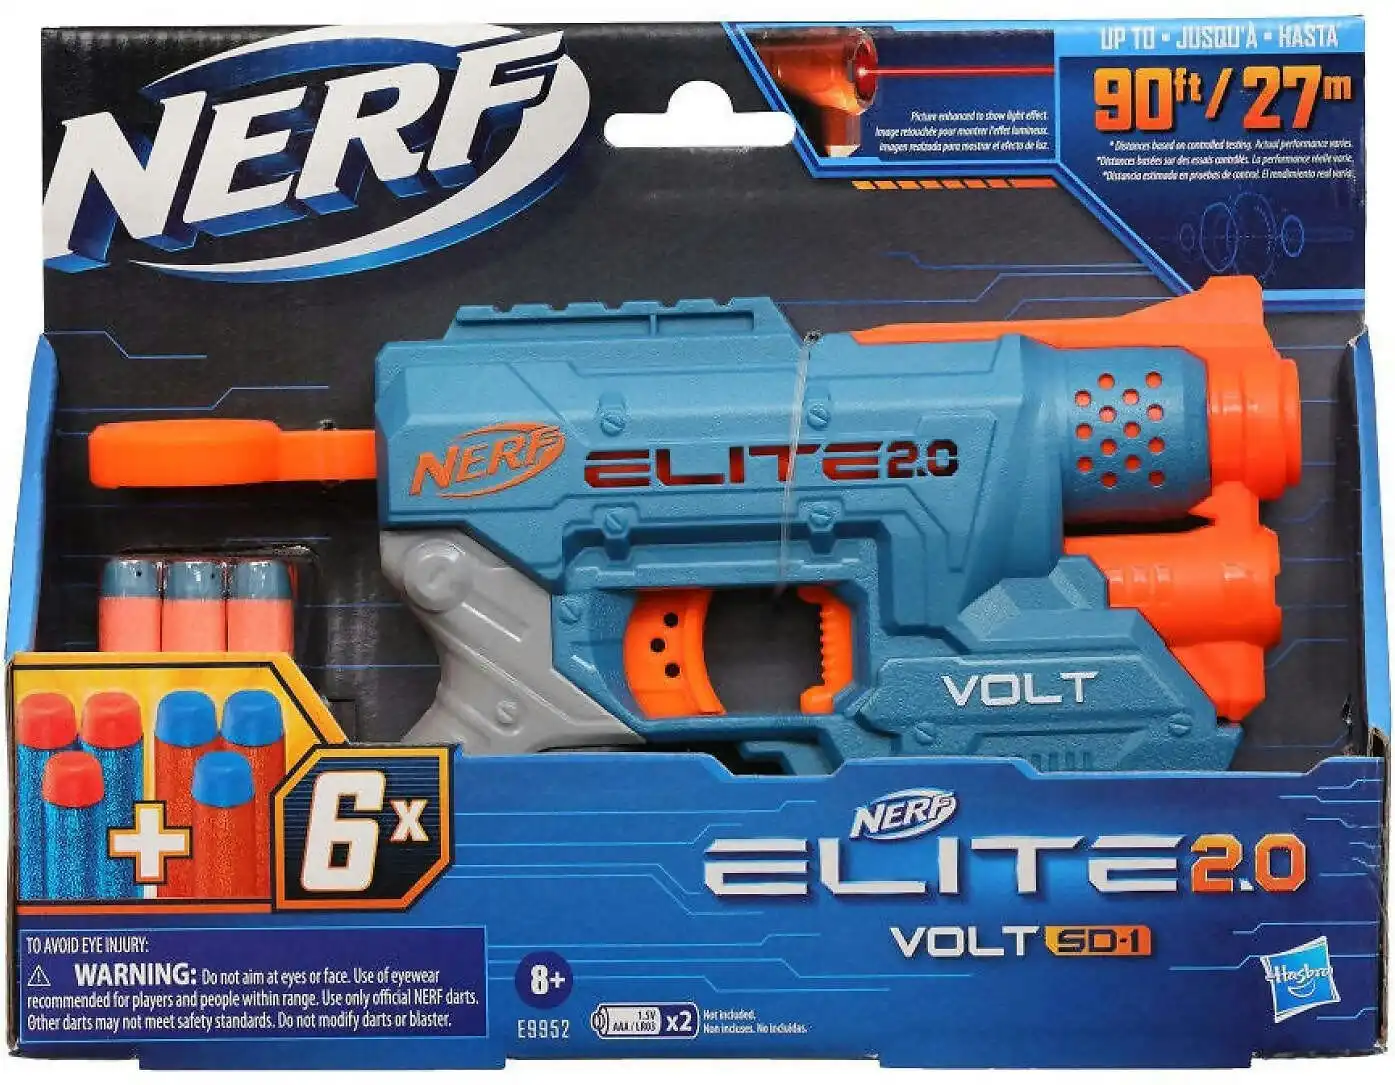 Nerf - Elite 2.0 Volt Sd-1 - Hasbro